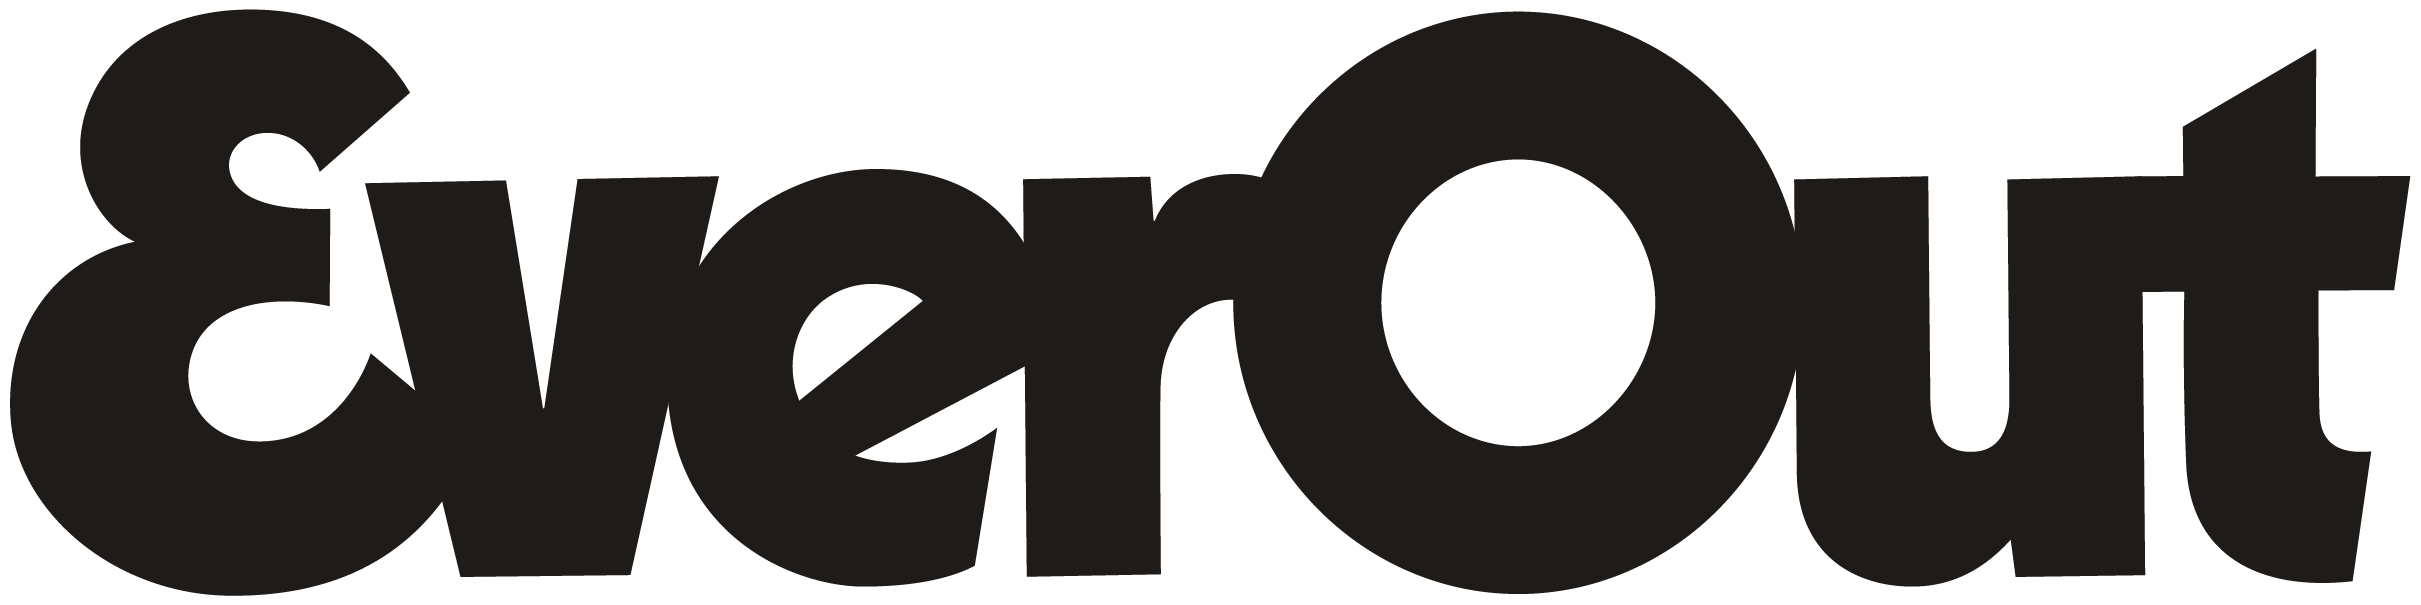 everout-logo-black.png